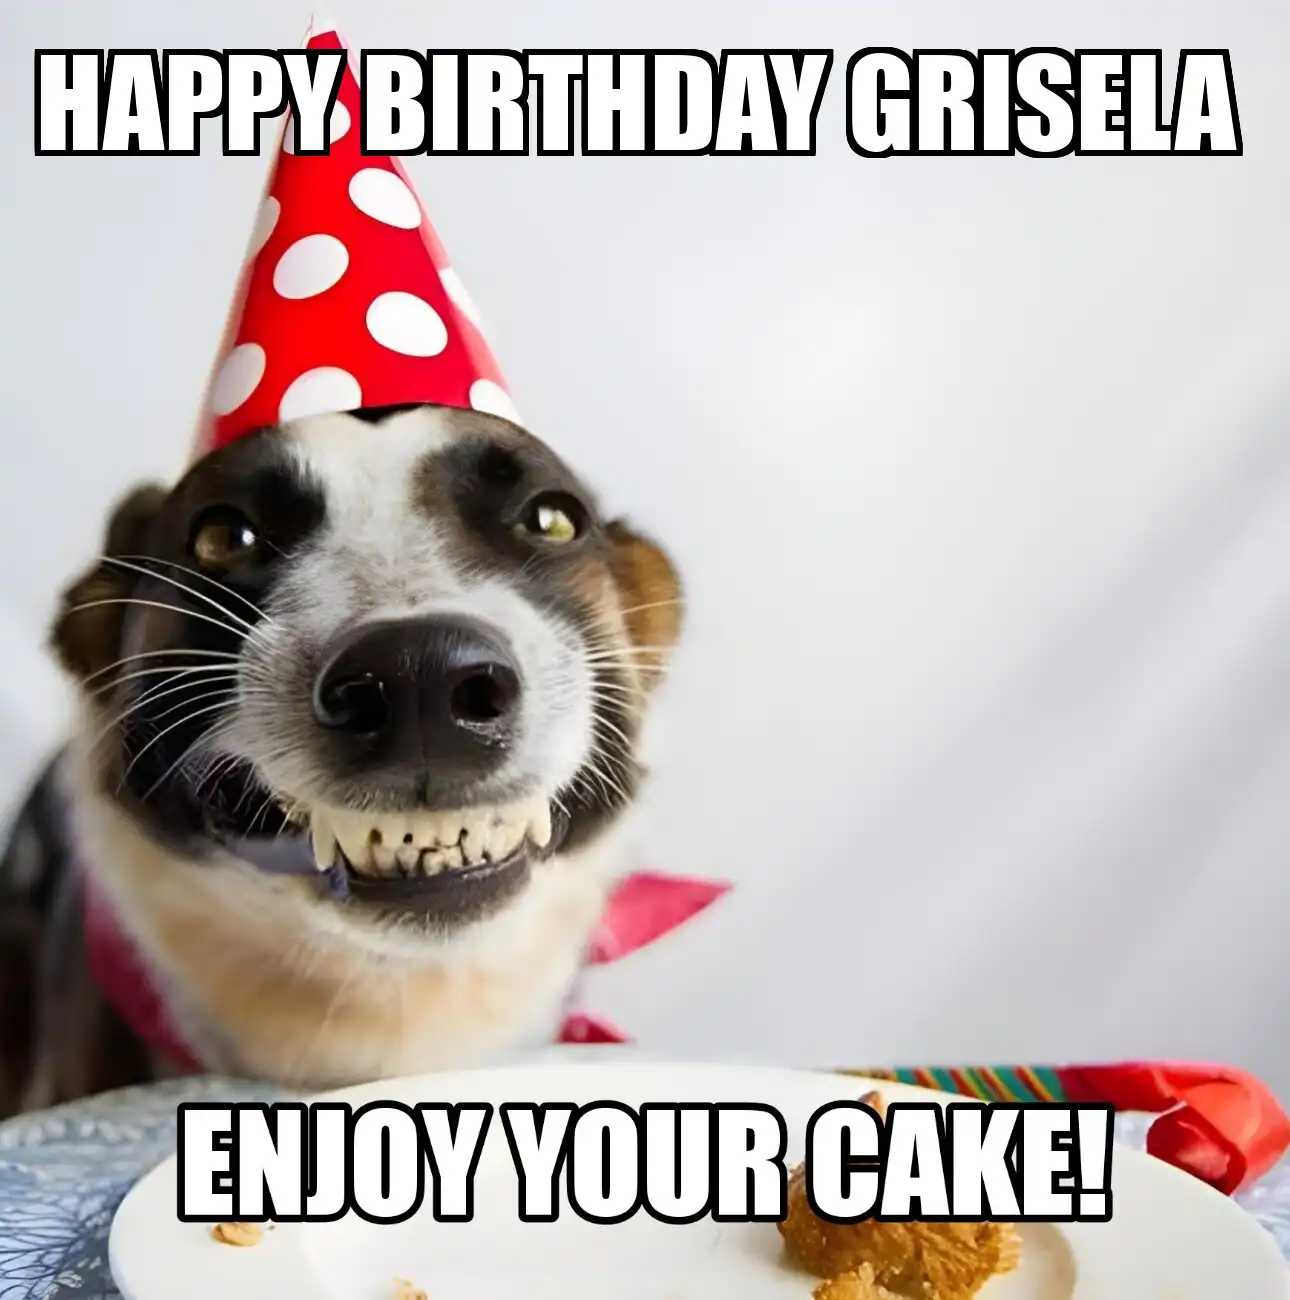 Happy Birthday Grisela Enjoy Your Cake Dog Meme